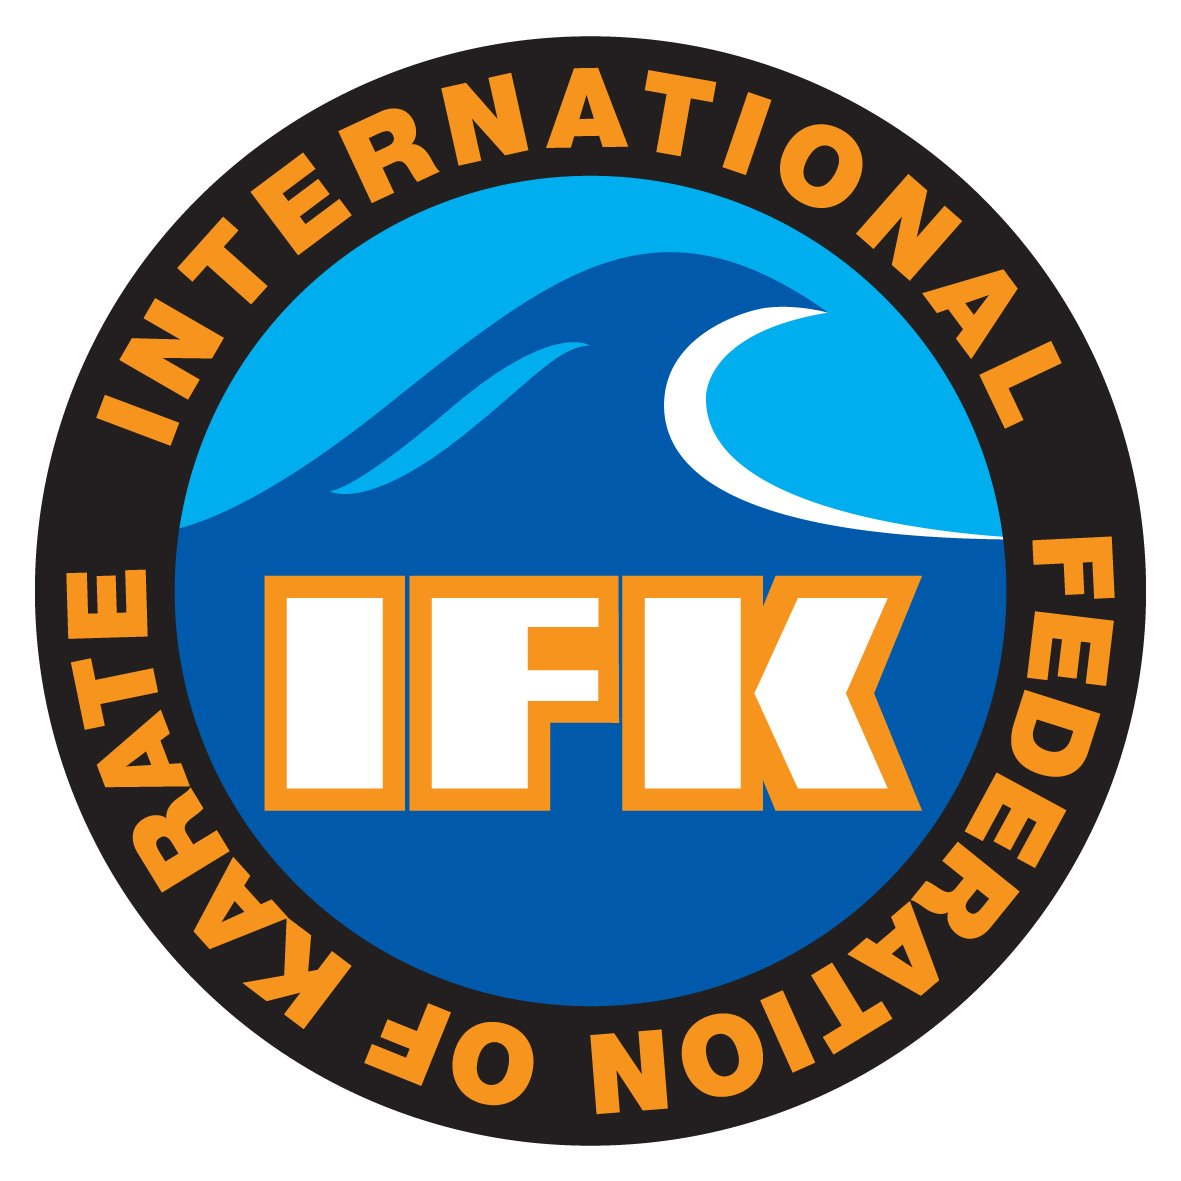 International Federation of Karate